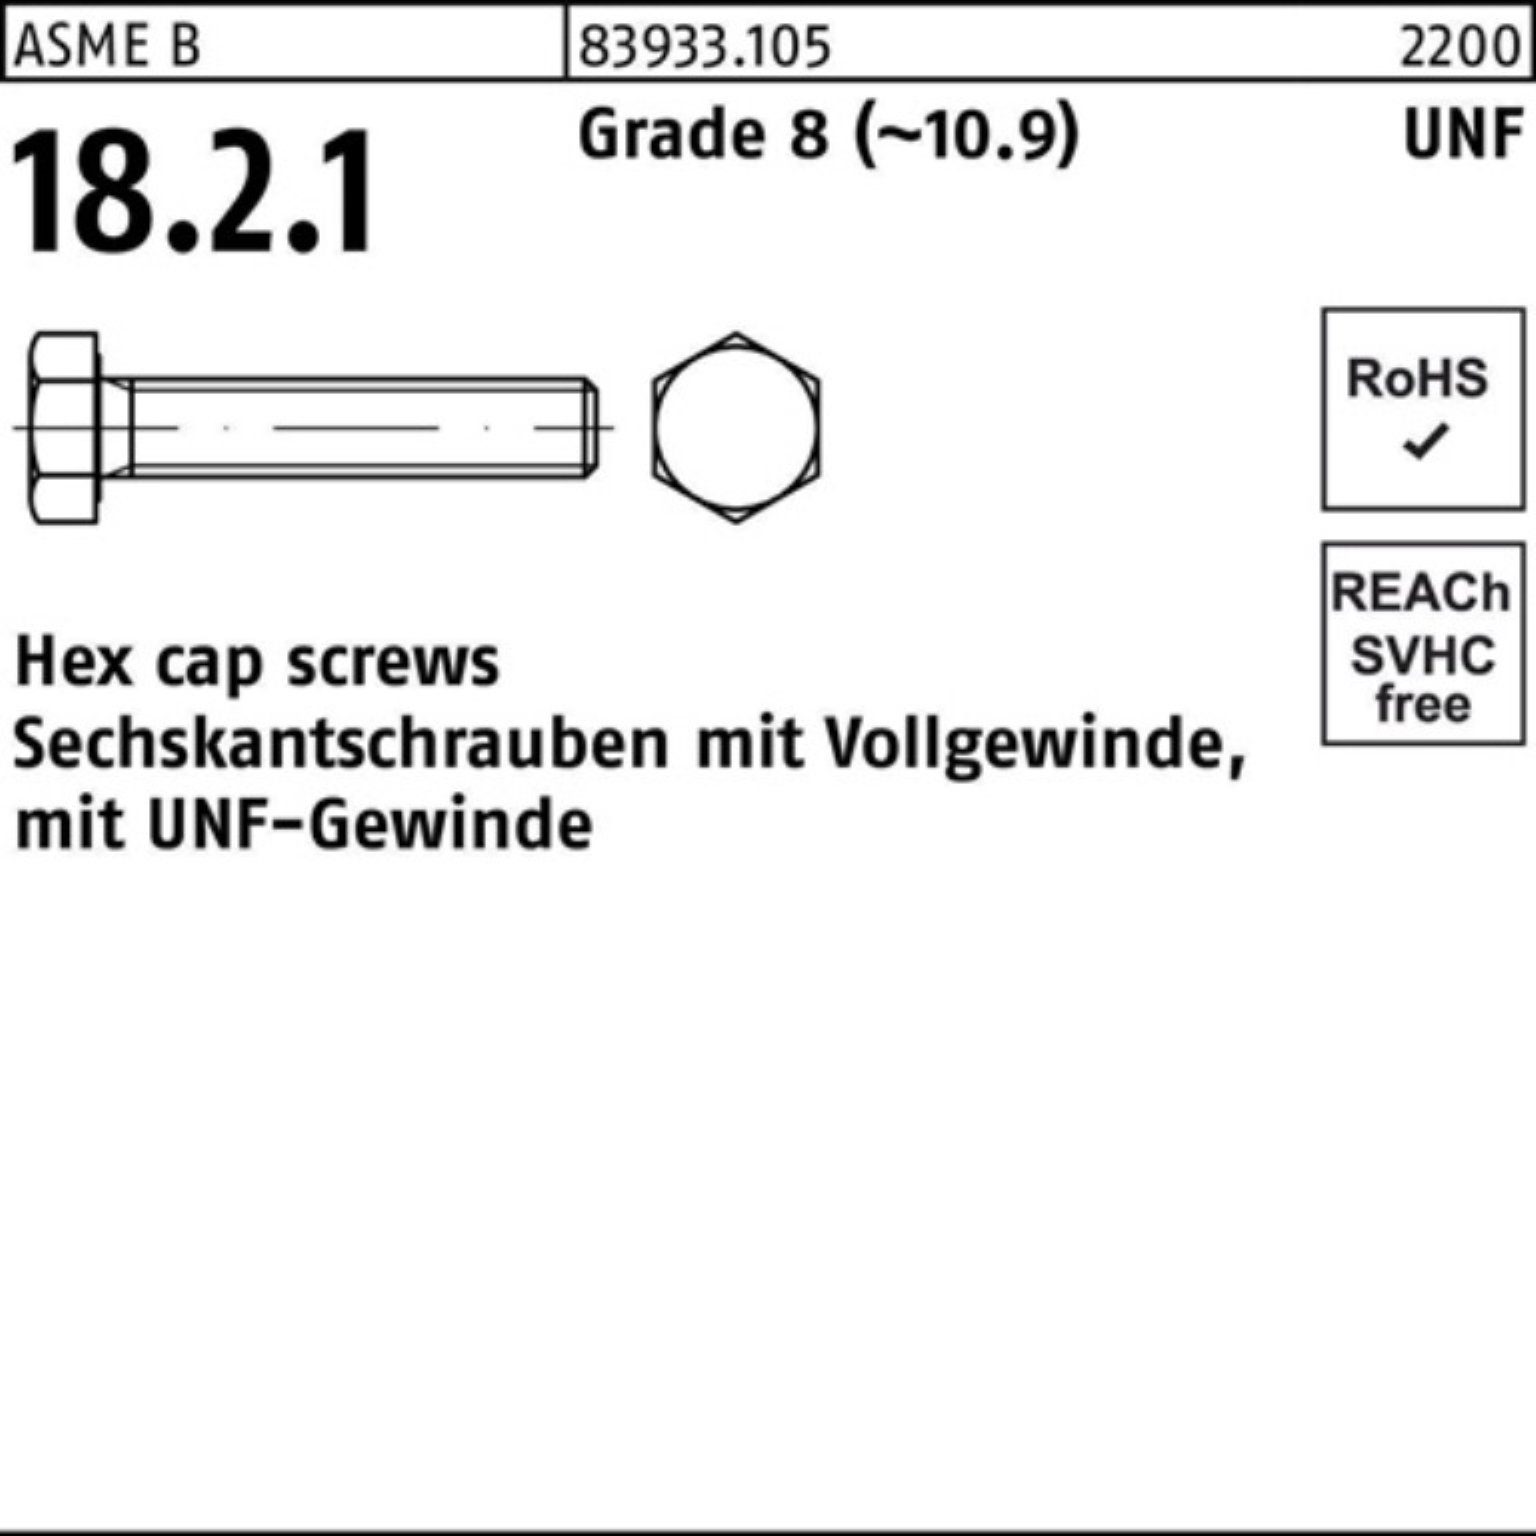 Reyher Sechskantschraube 100er Pack Sechskantschraube R 83933 UNF-Gewinde VG 1/2x 3/4 Grade 8